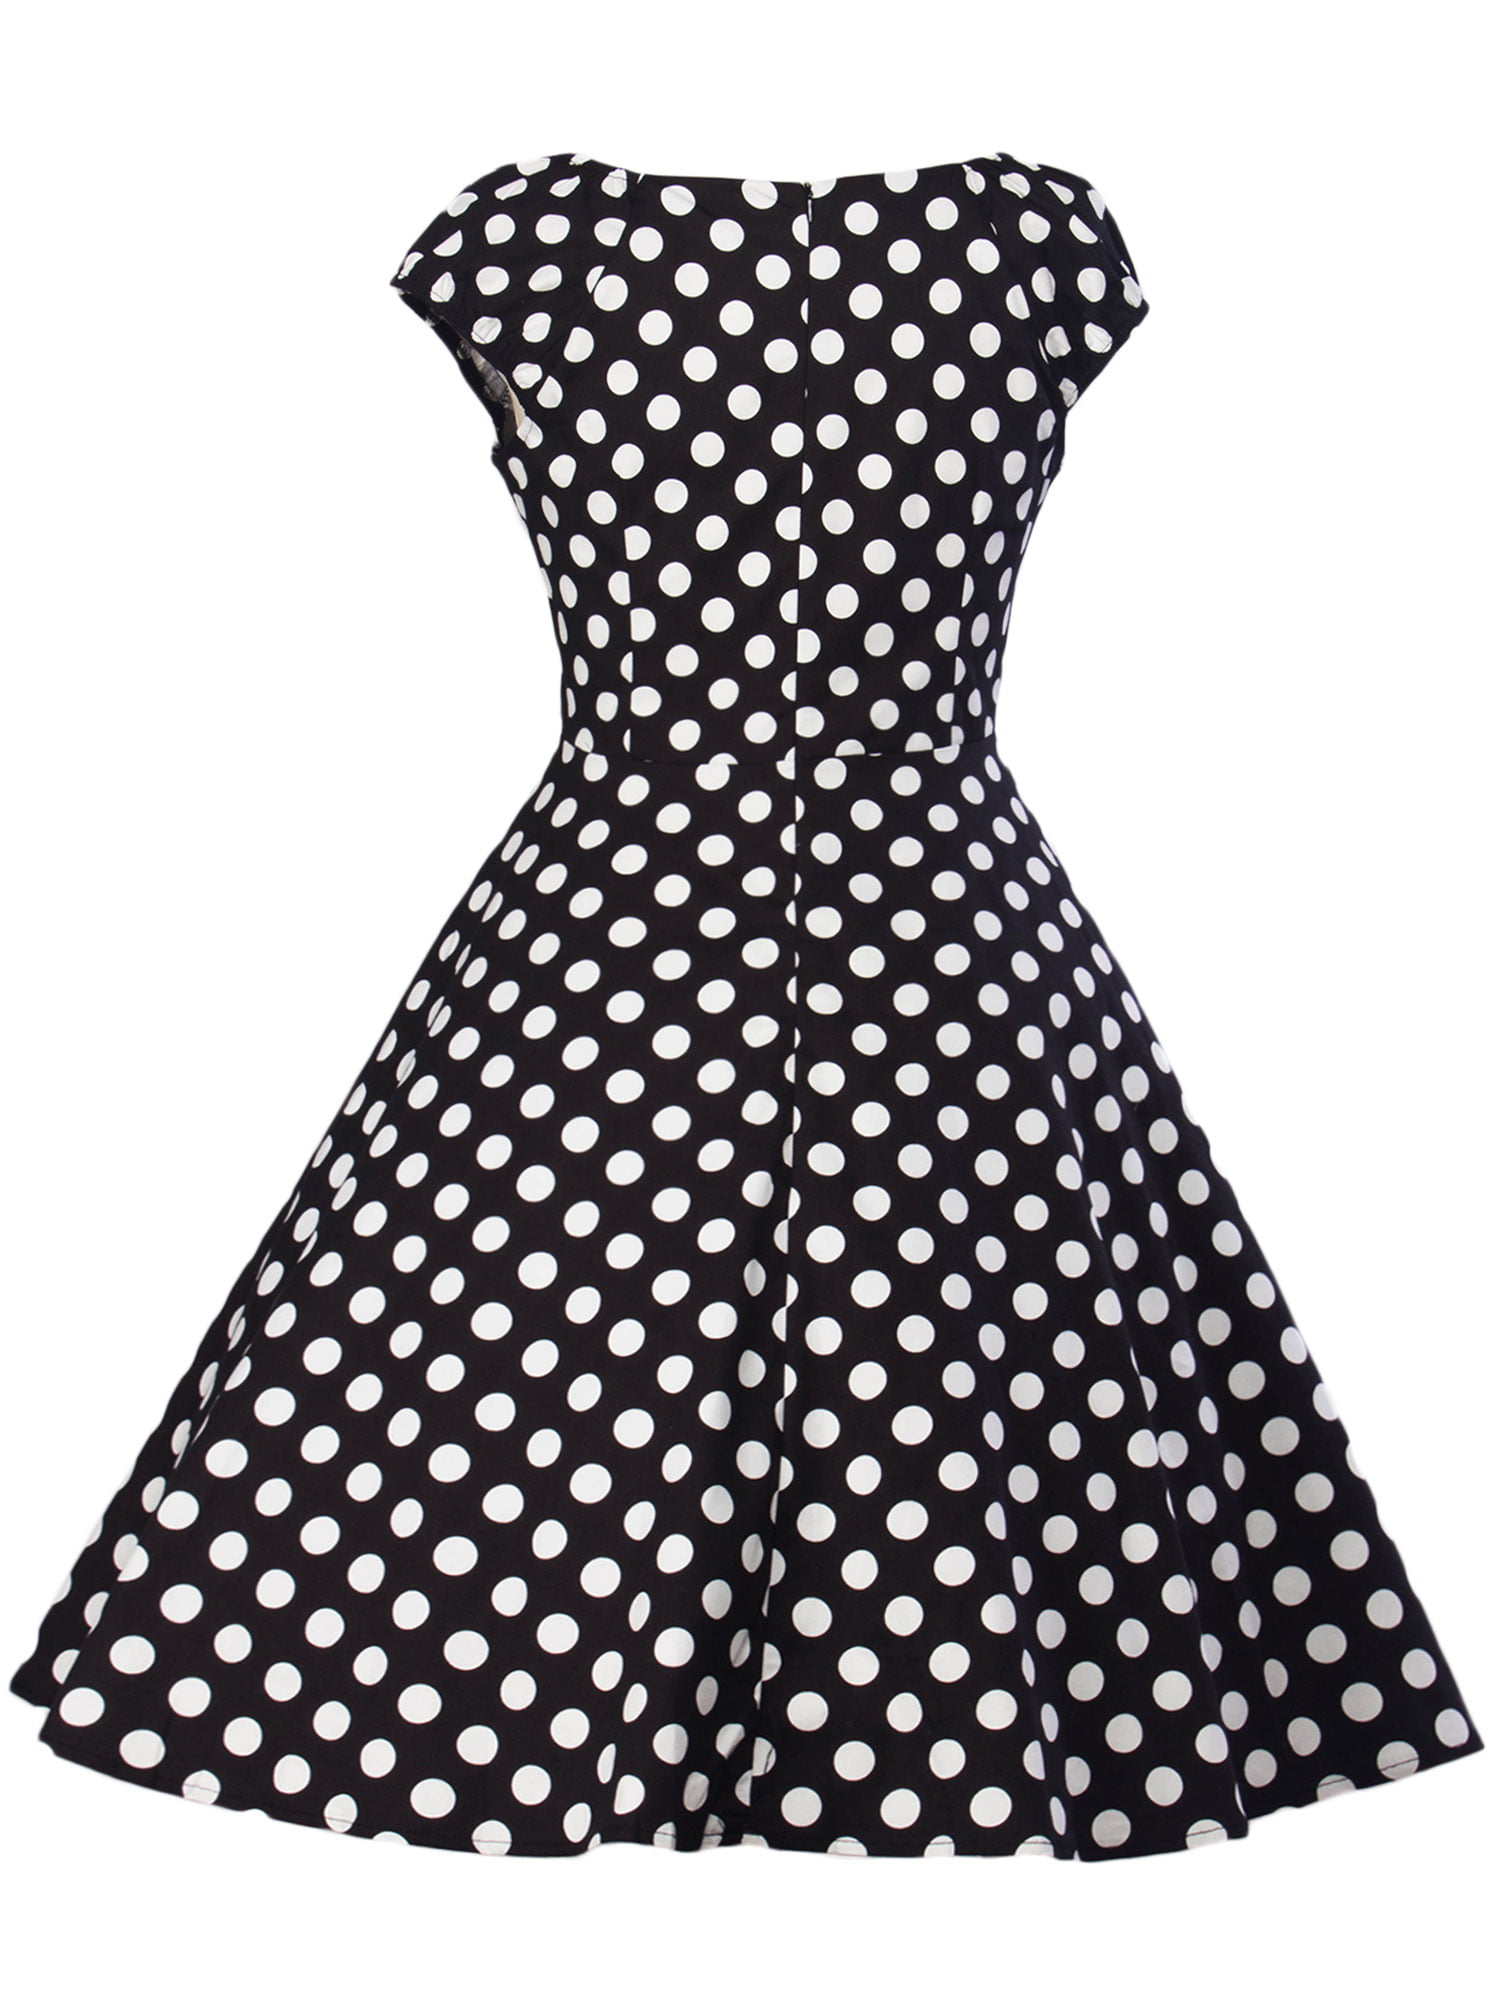 Vintage 1950s Rockabilly Polka Dots Audrey Dress Retro Cocktail Dress